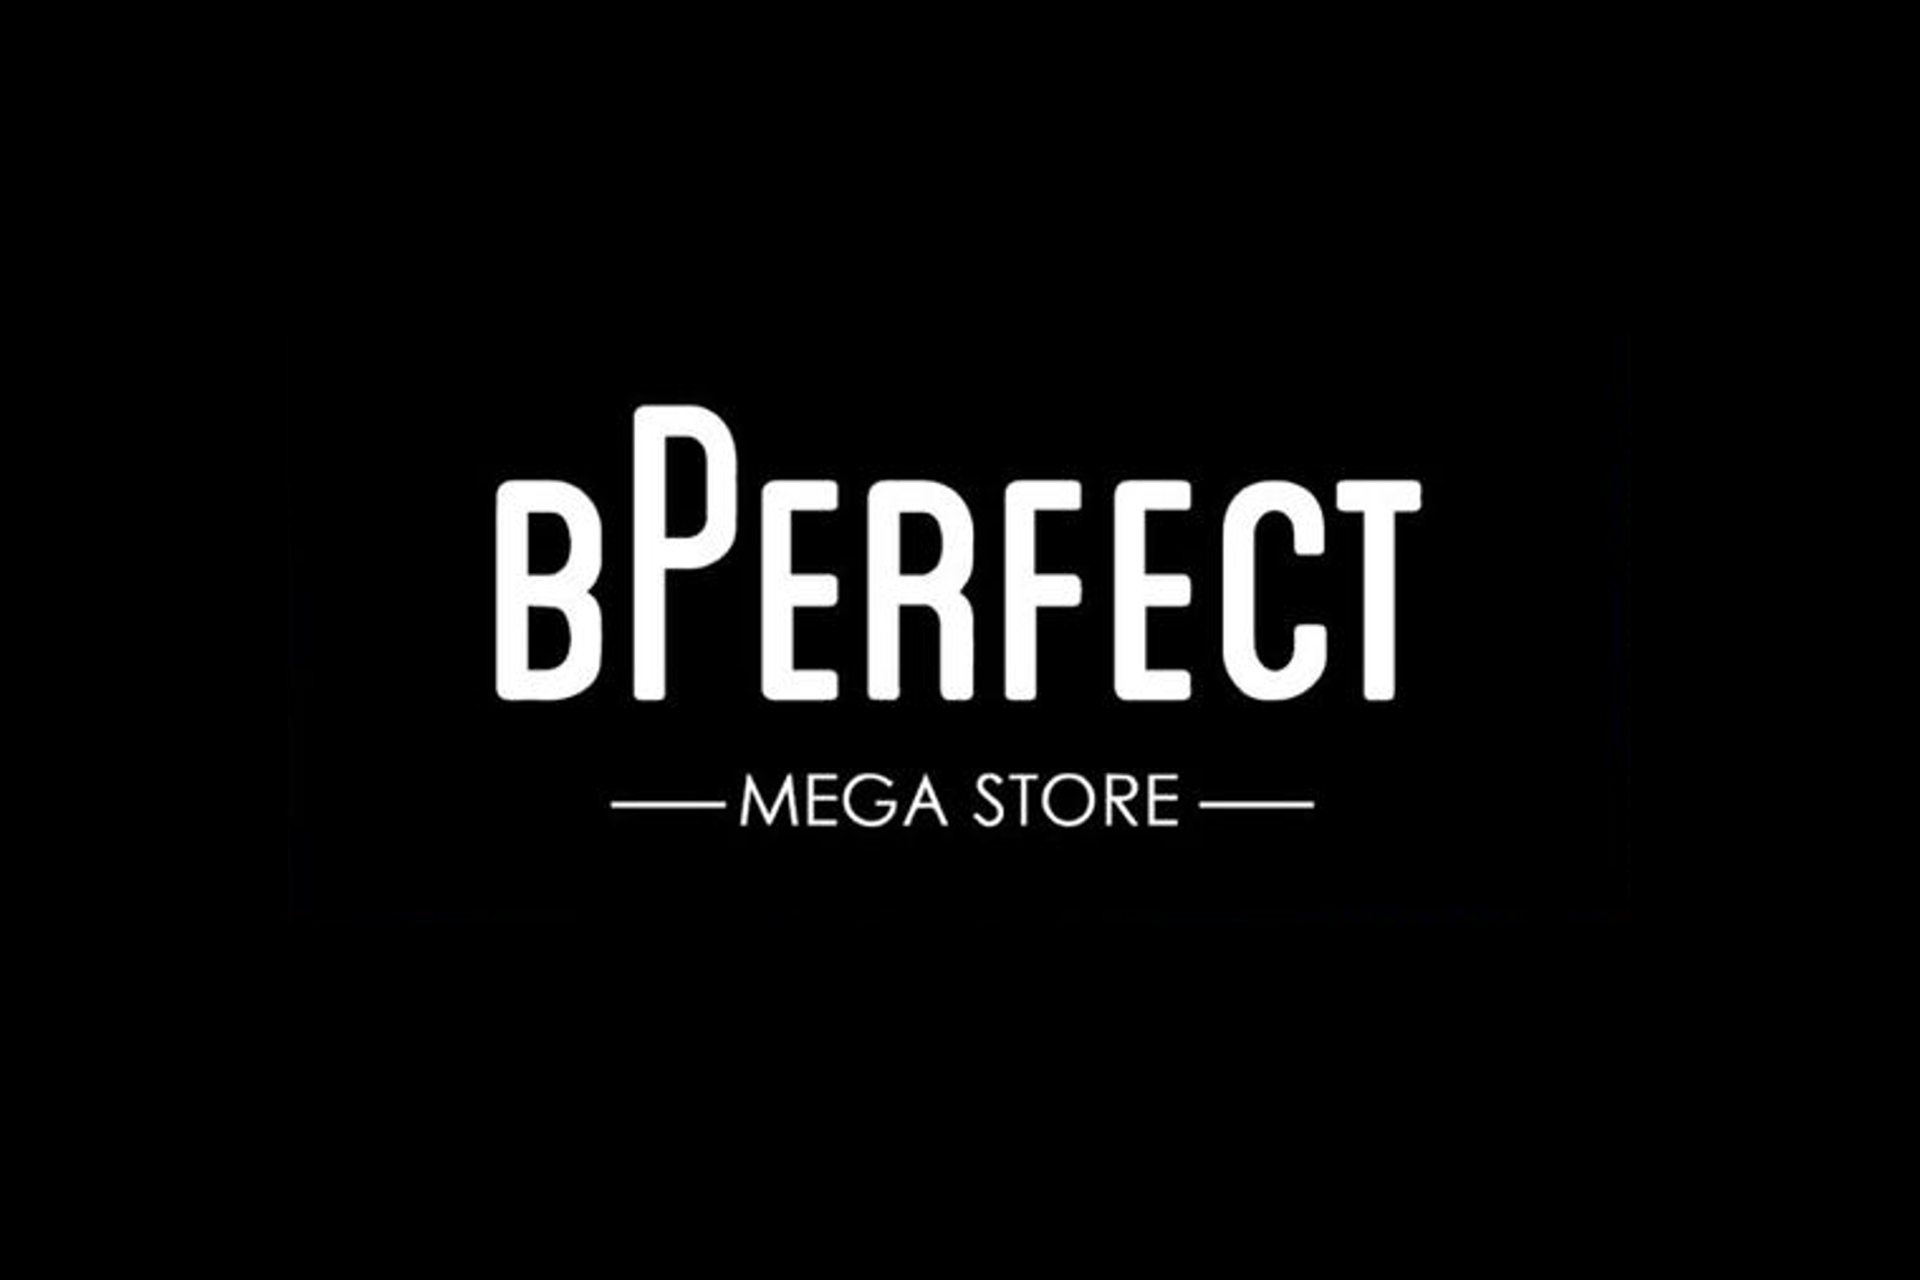 BPerfect has arrived at Silverburn | Silverburn Shopping Centre